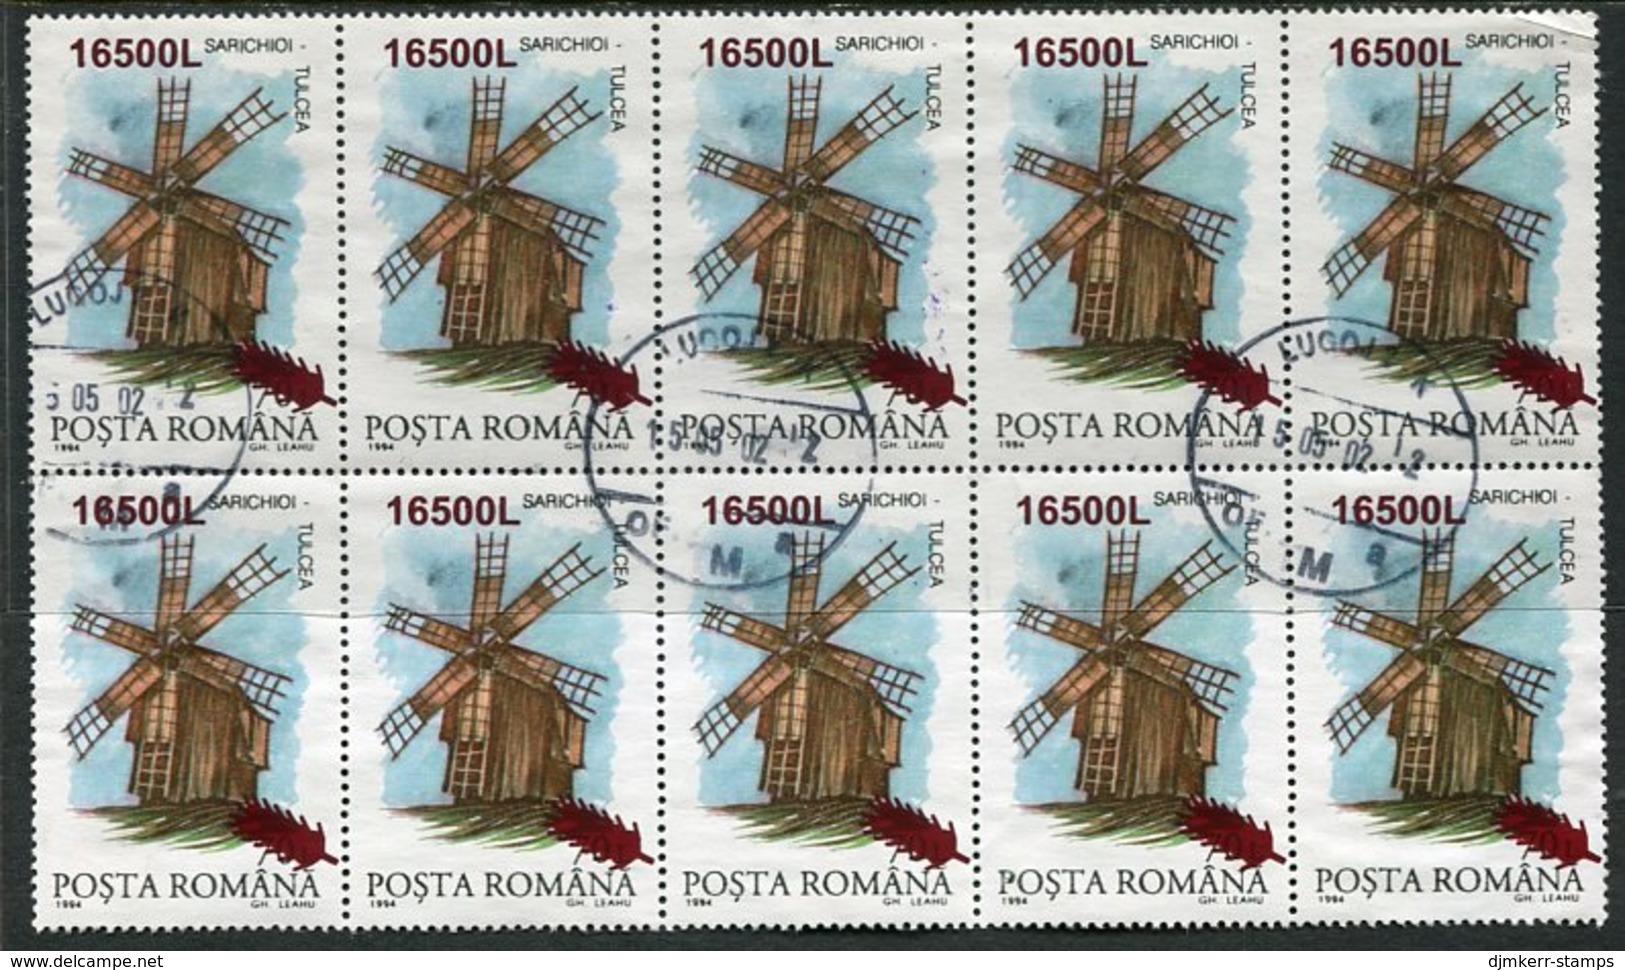 ROMANIA 2001 Windmill 70 L. Surcharged 16500 Block Of 10 Used.  Michel 5559 - Usati